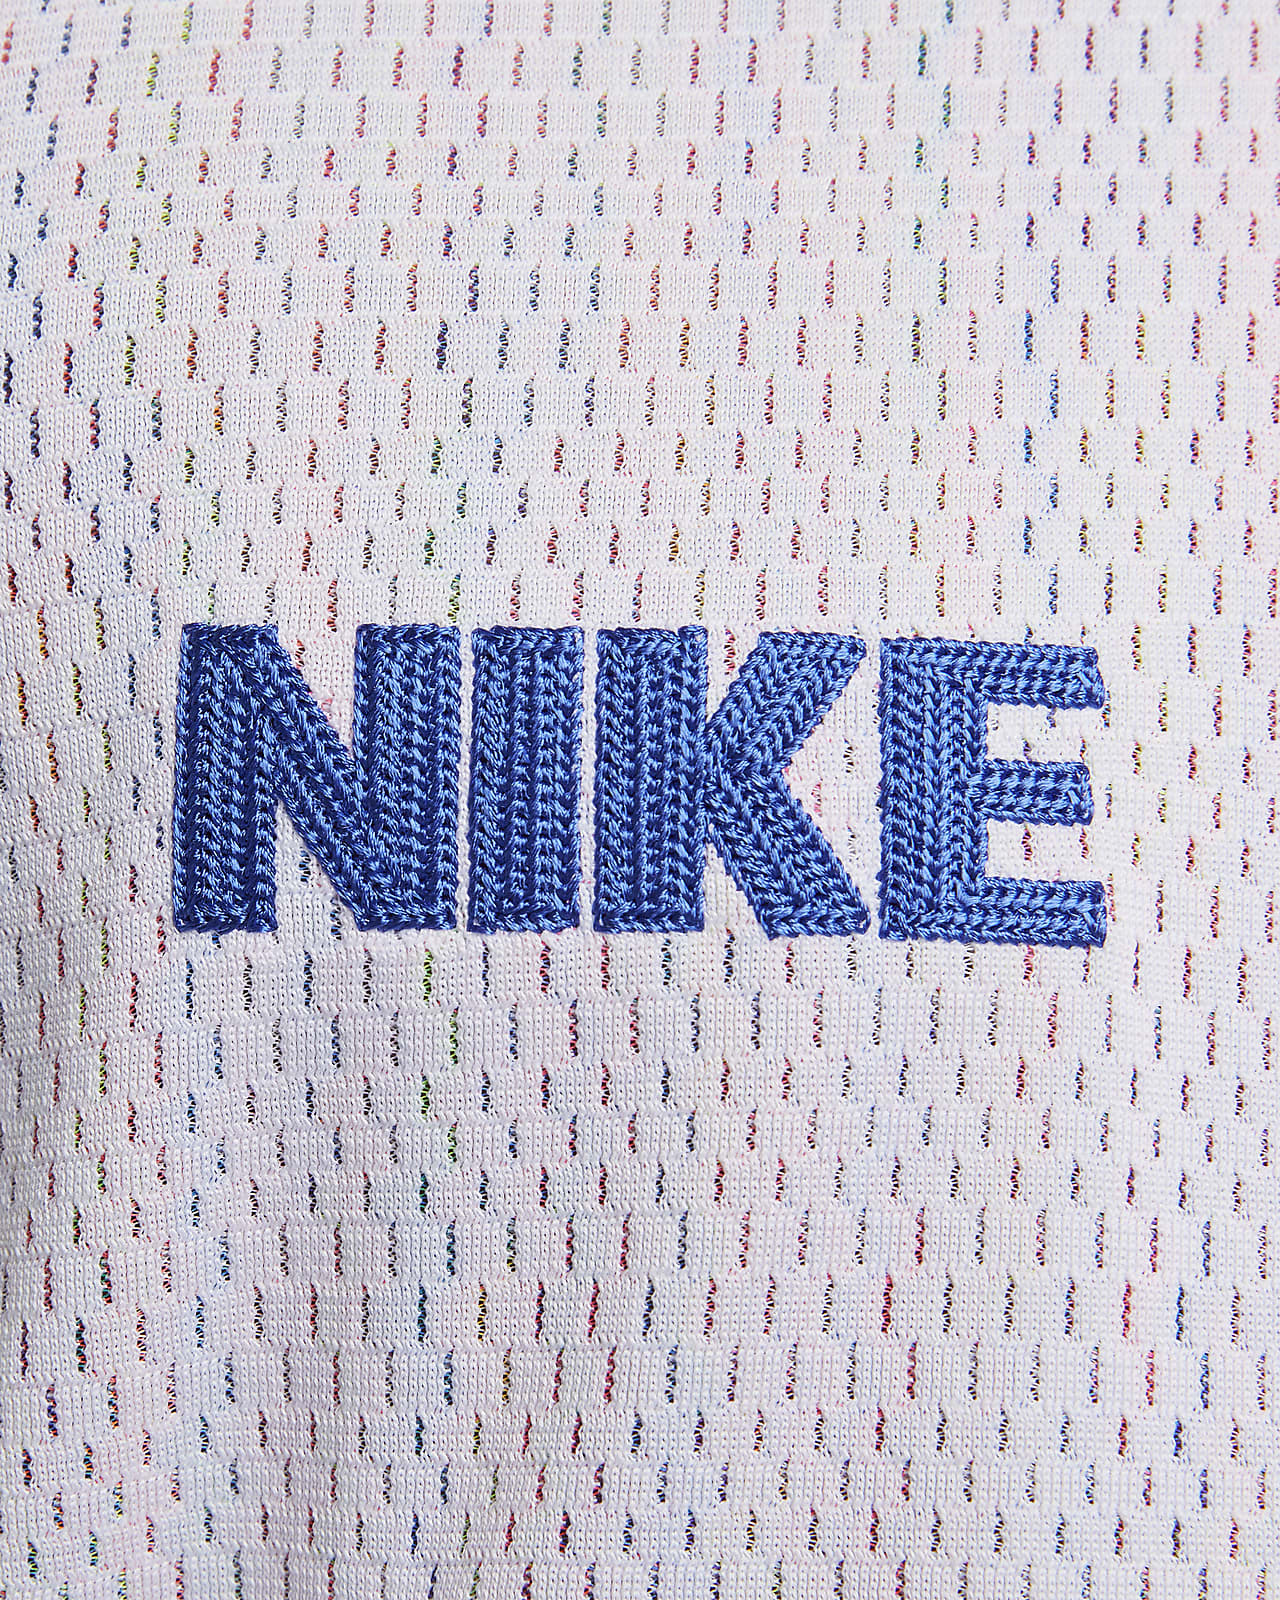 Nike Men's Dri-Fit DNA Basketball Jersey, Large, White